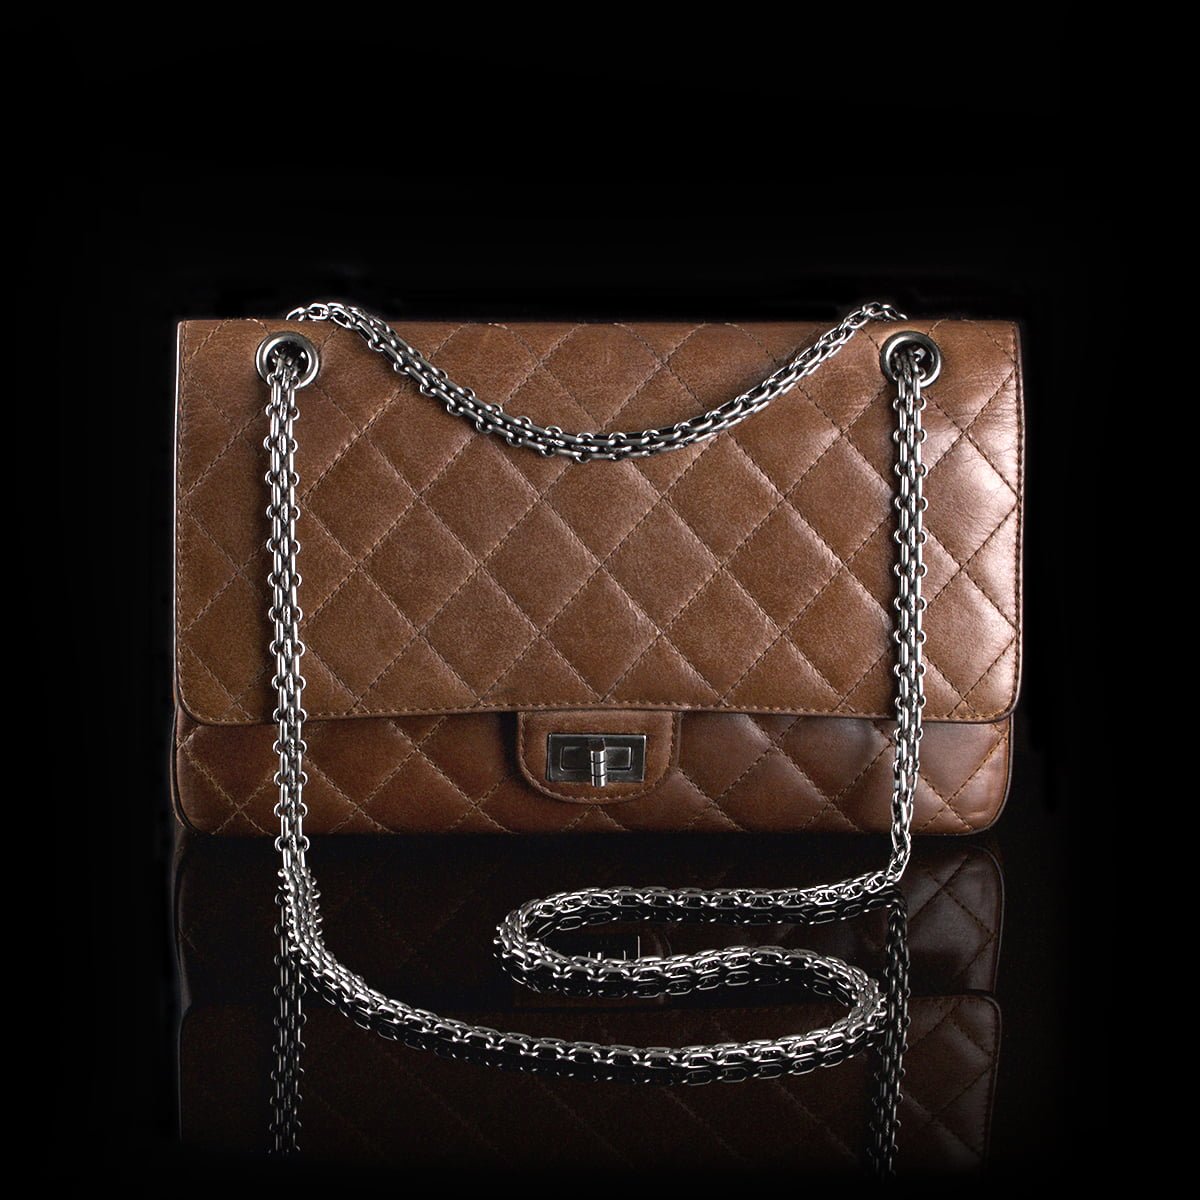 SOLD! Chanel Cross Body Bag Model Reissue - Classic390